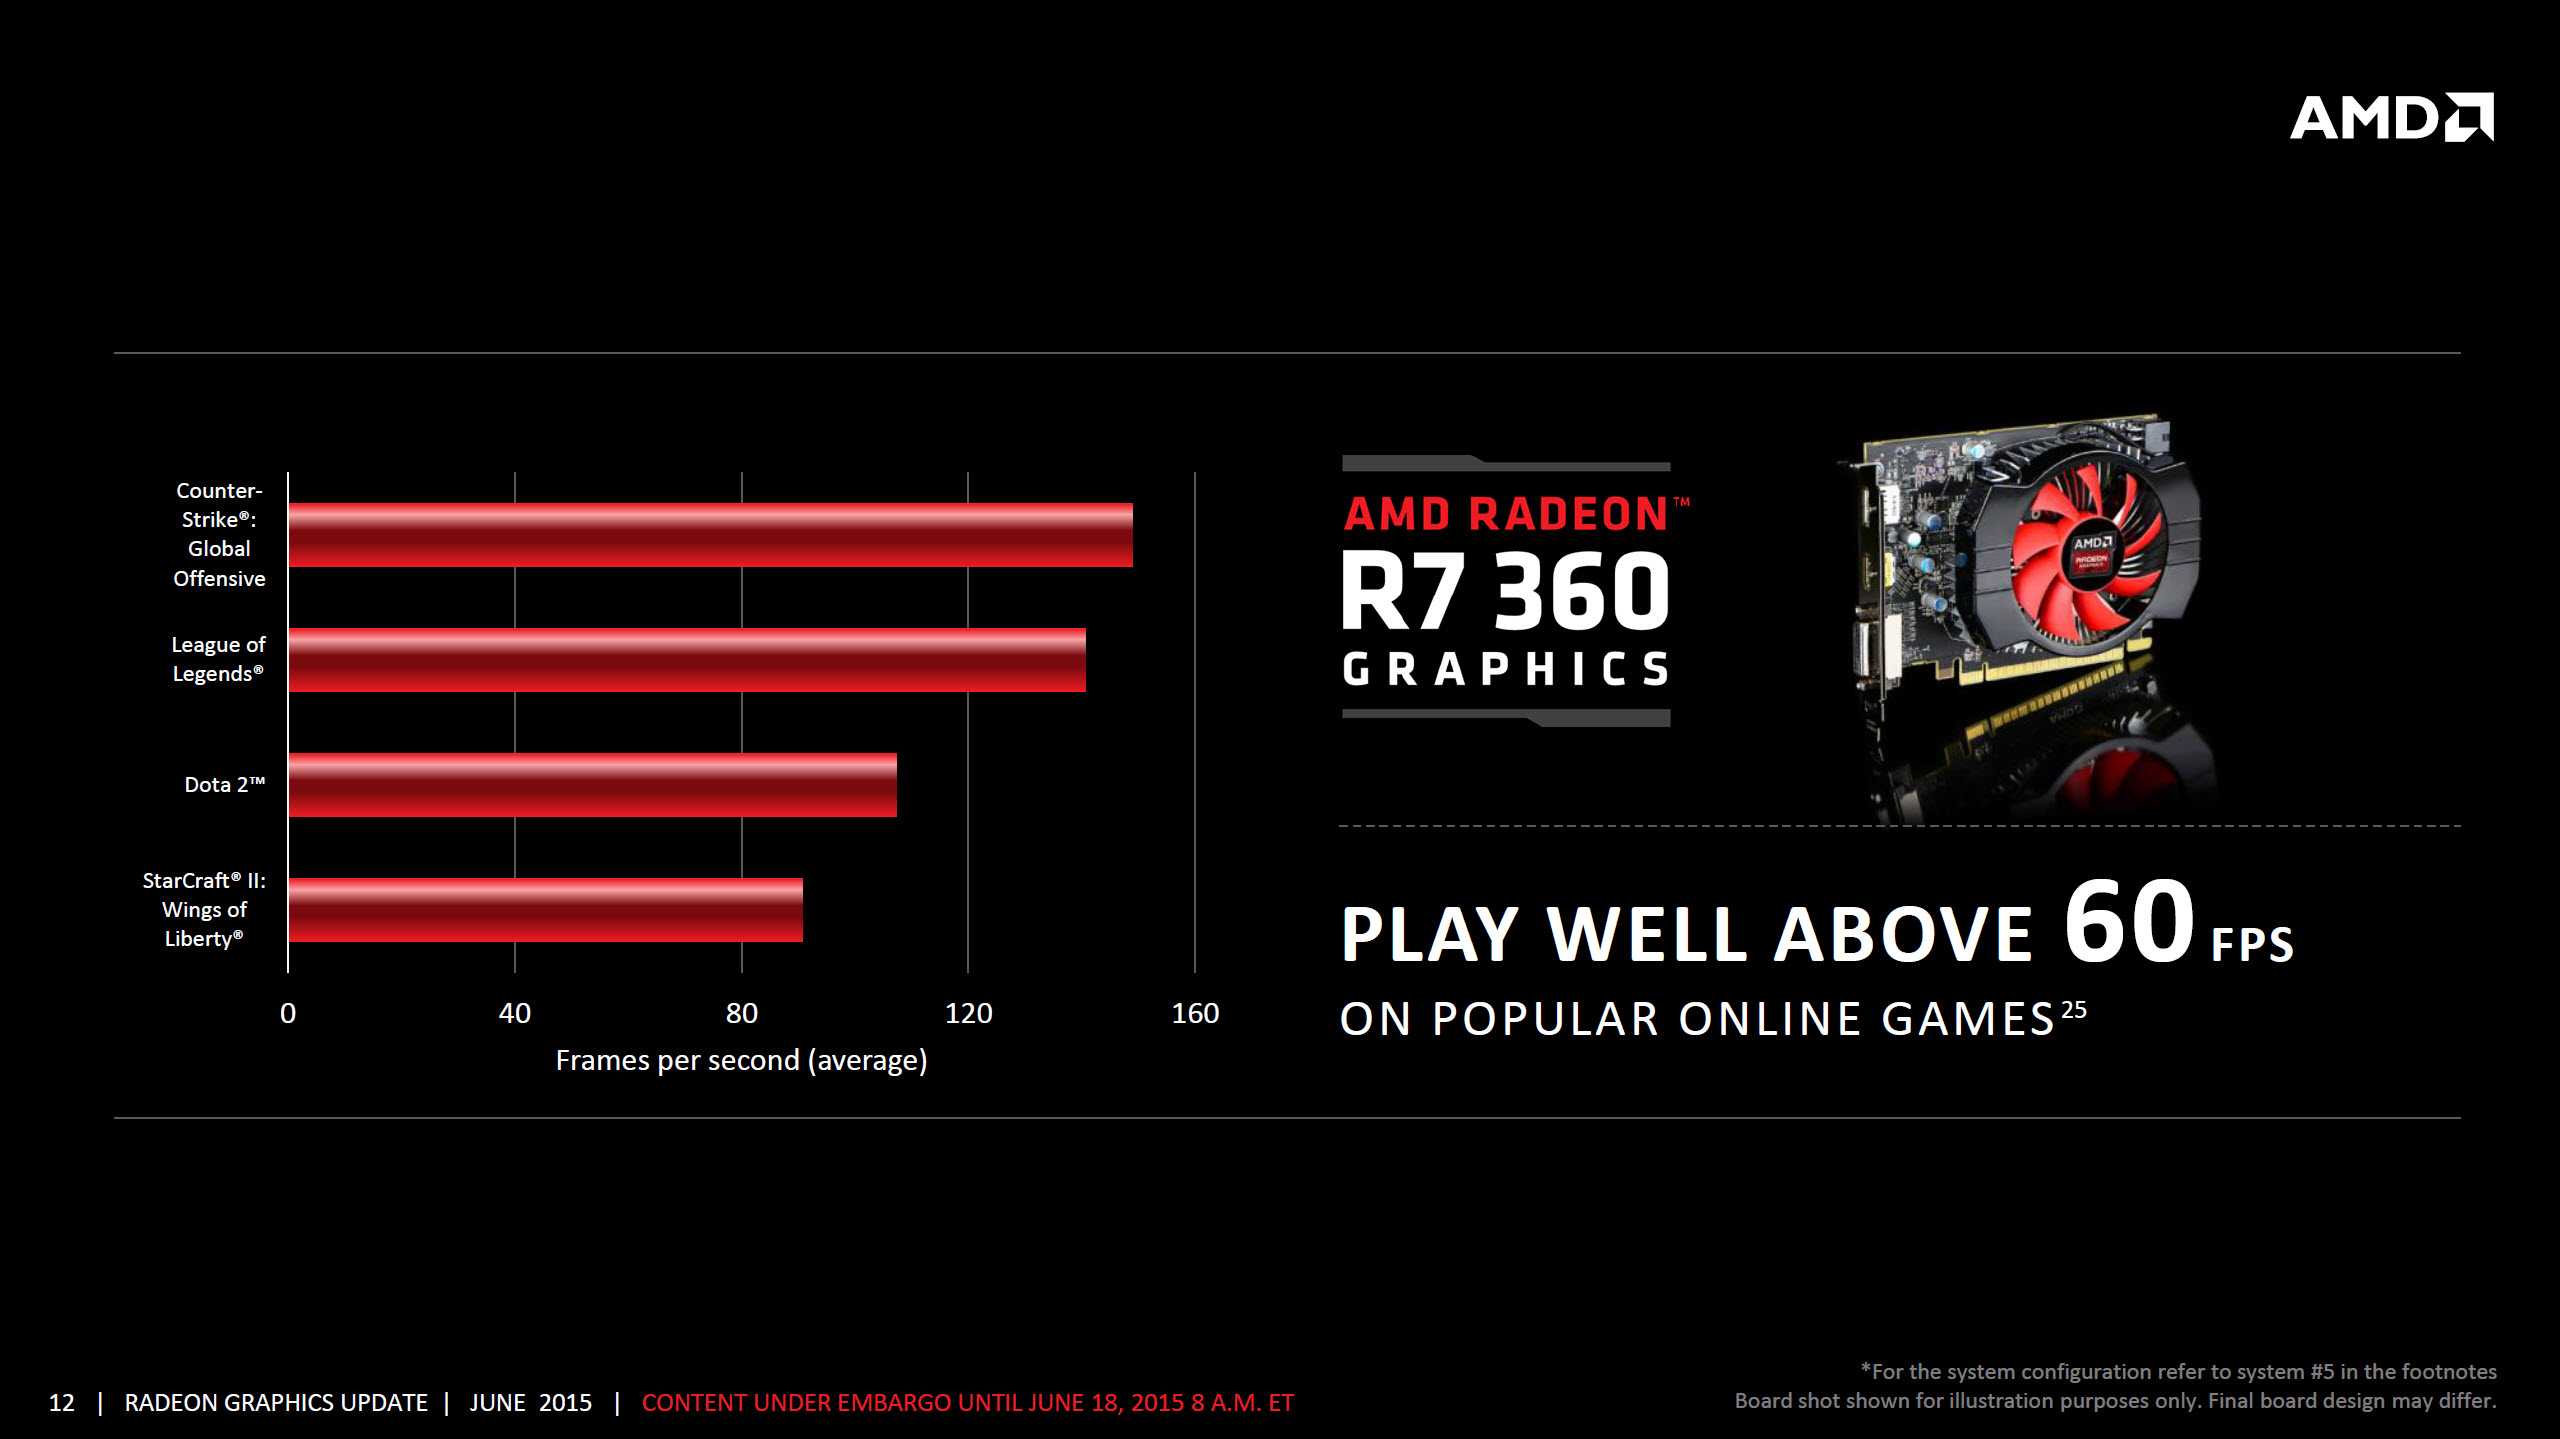 Amd radeon r9 390 & r9 380 overclocking benchmark - 1% to 7% performance gains | gamersnexus - gaming pc builds & hardware benchmarks